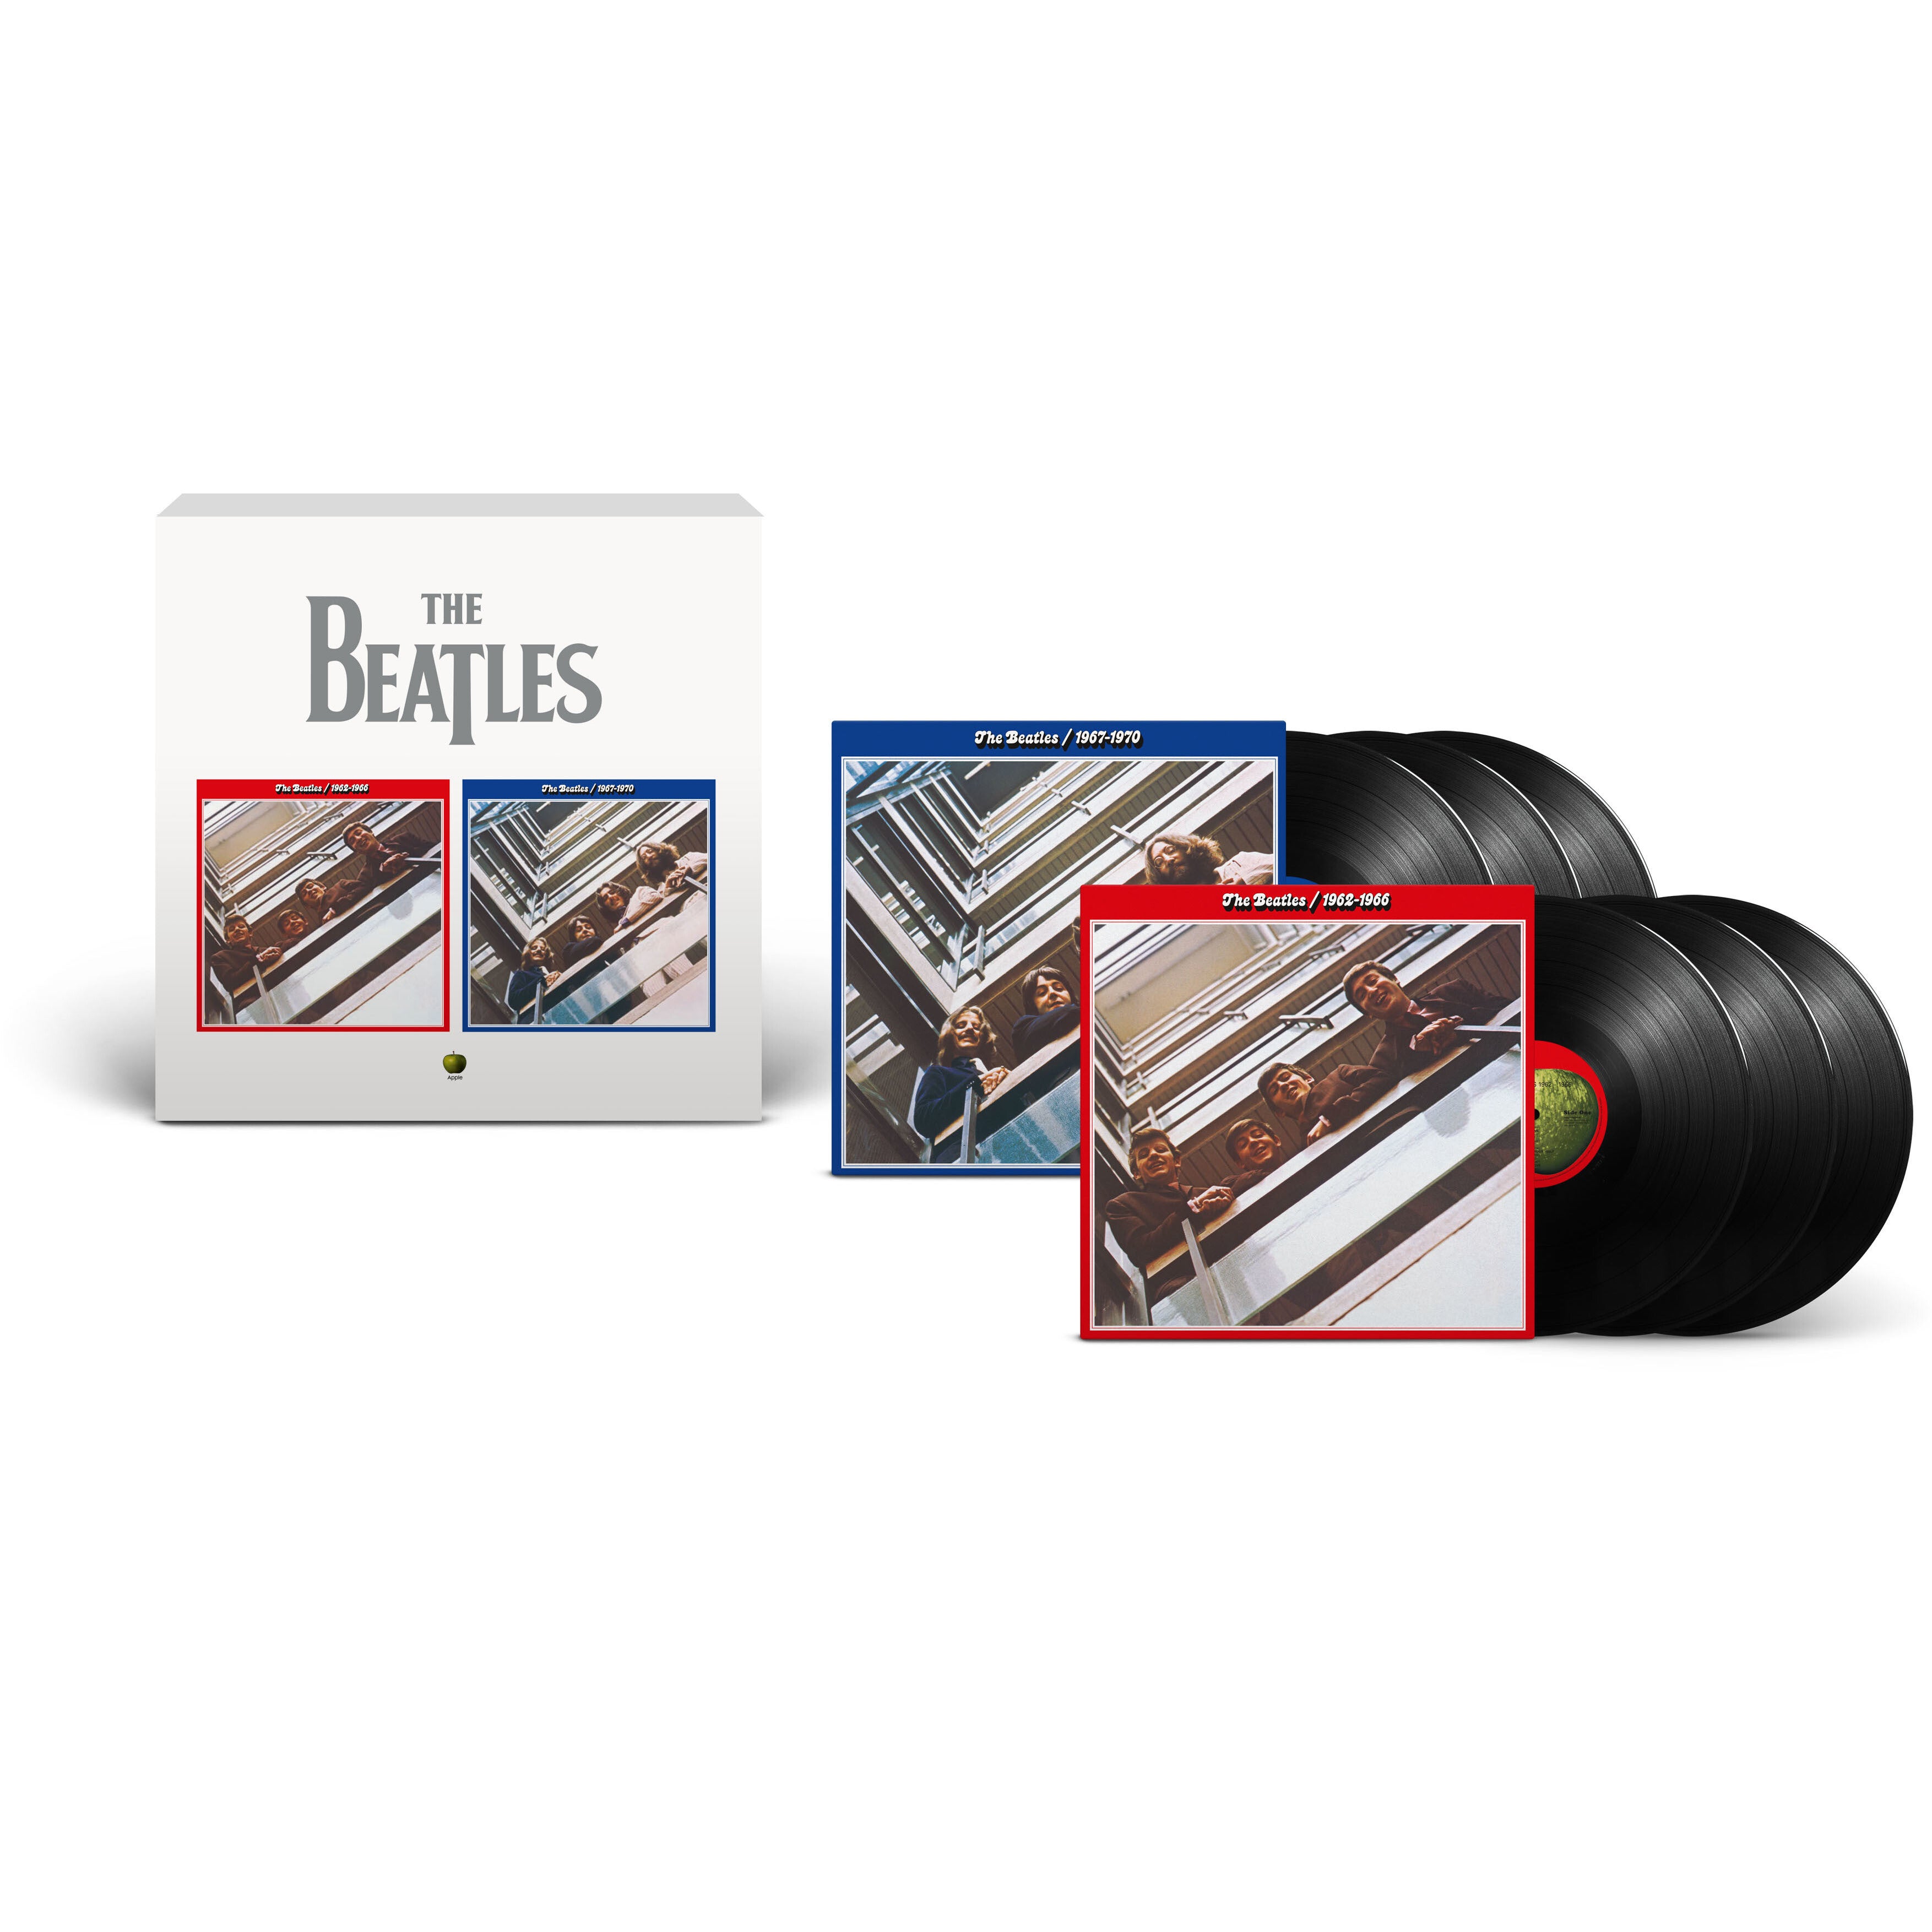 https://images.bravado.de/prod/product-assets/product-asset-data/beatles-the/the-beatles-domestic/products/505632/web/413350/image-thumb__413350__3000x3000_original/The-Beatles-The-Beatles-1962-1966-2023-Edition-The-Beatles-1967-1970-2023-Edition-Vinyl-505632-413350.jpg